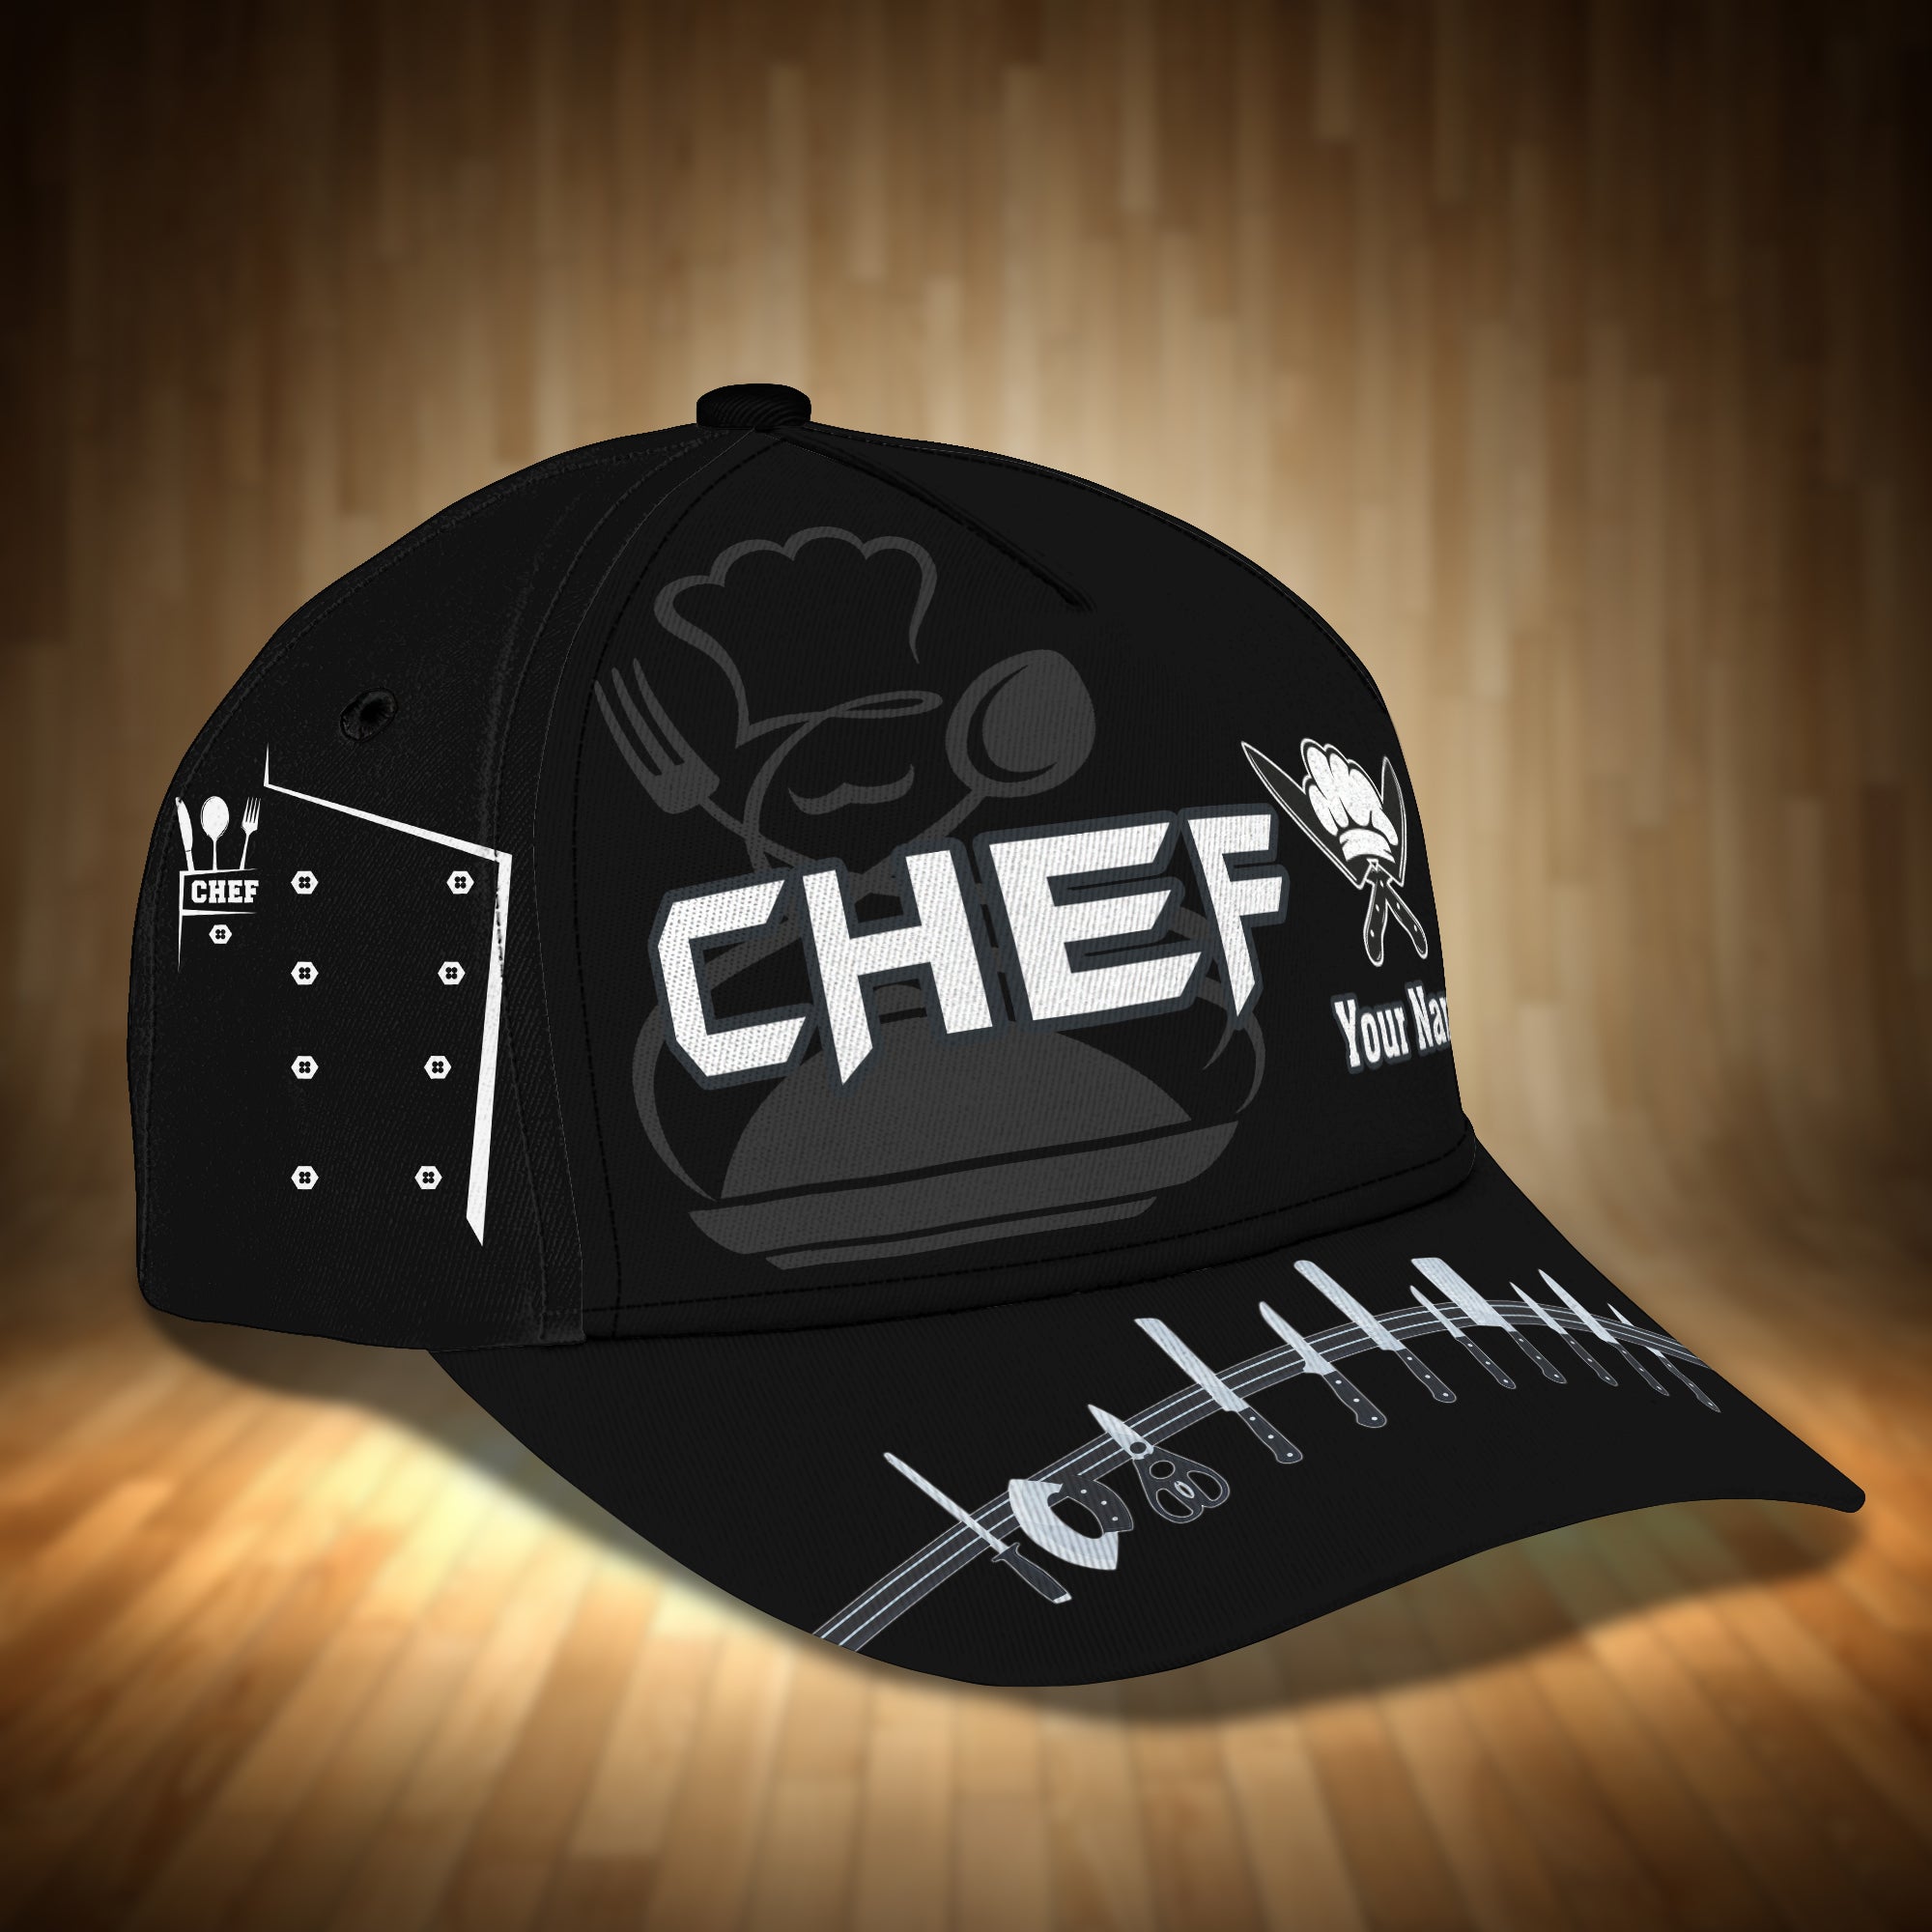 RINC98 - Personalized Name Cap - Chef12- HKM